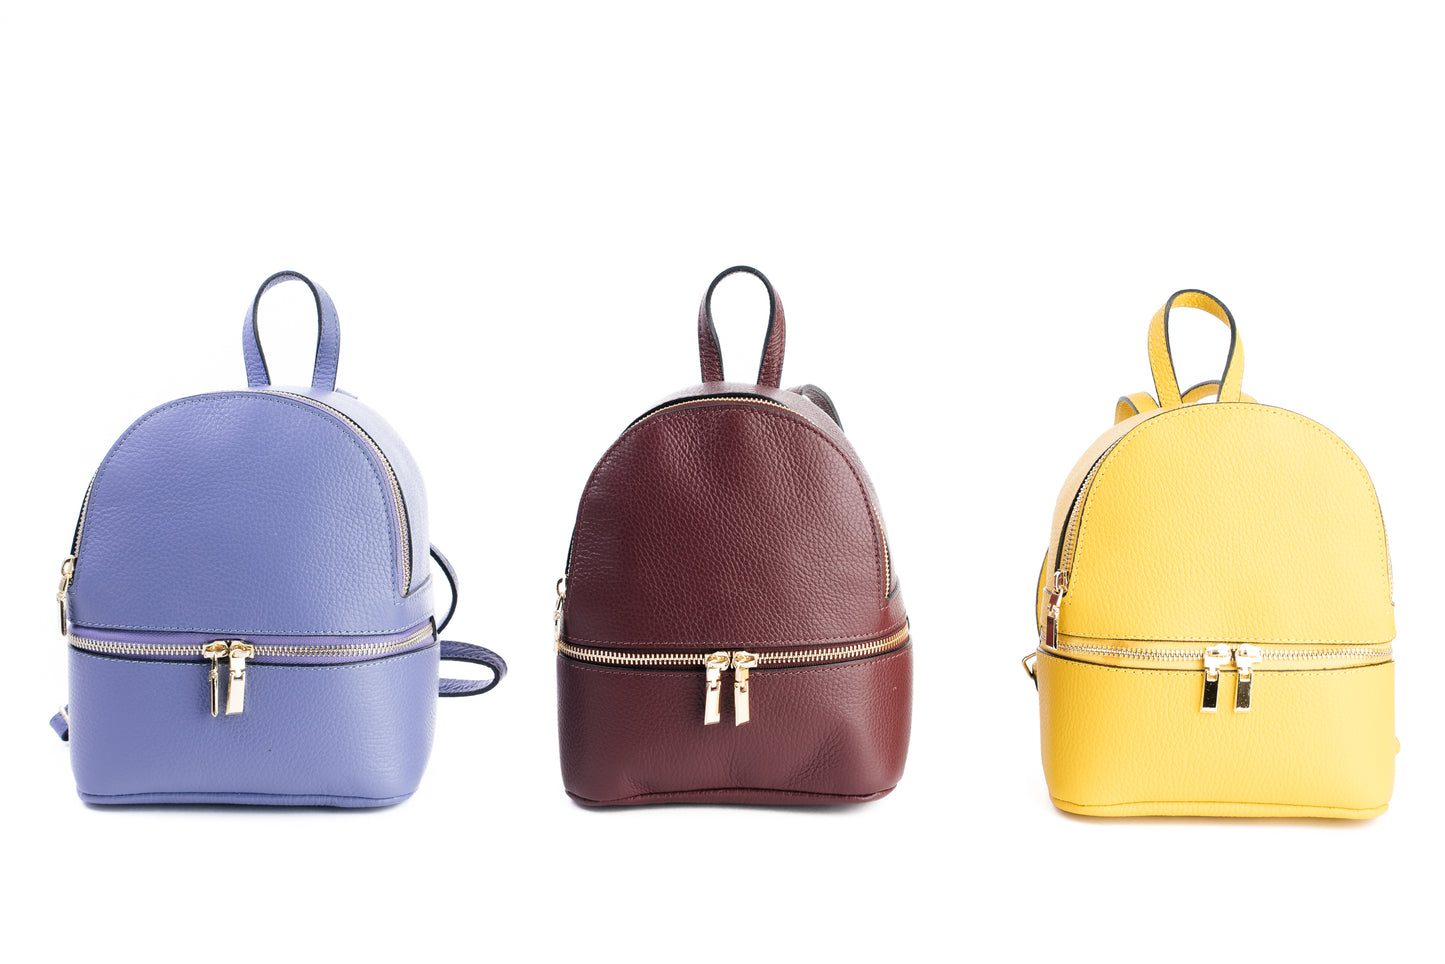 Amilu Ochre Yellow Mini Italian Leather Rucksack Bag